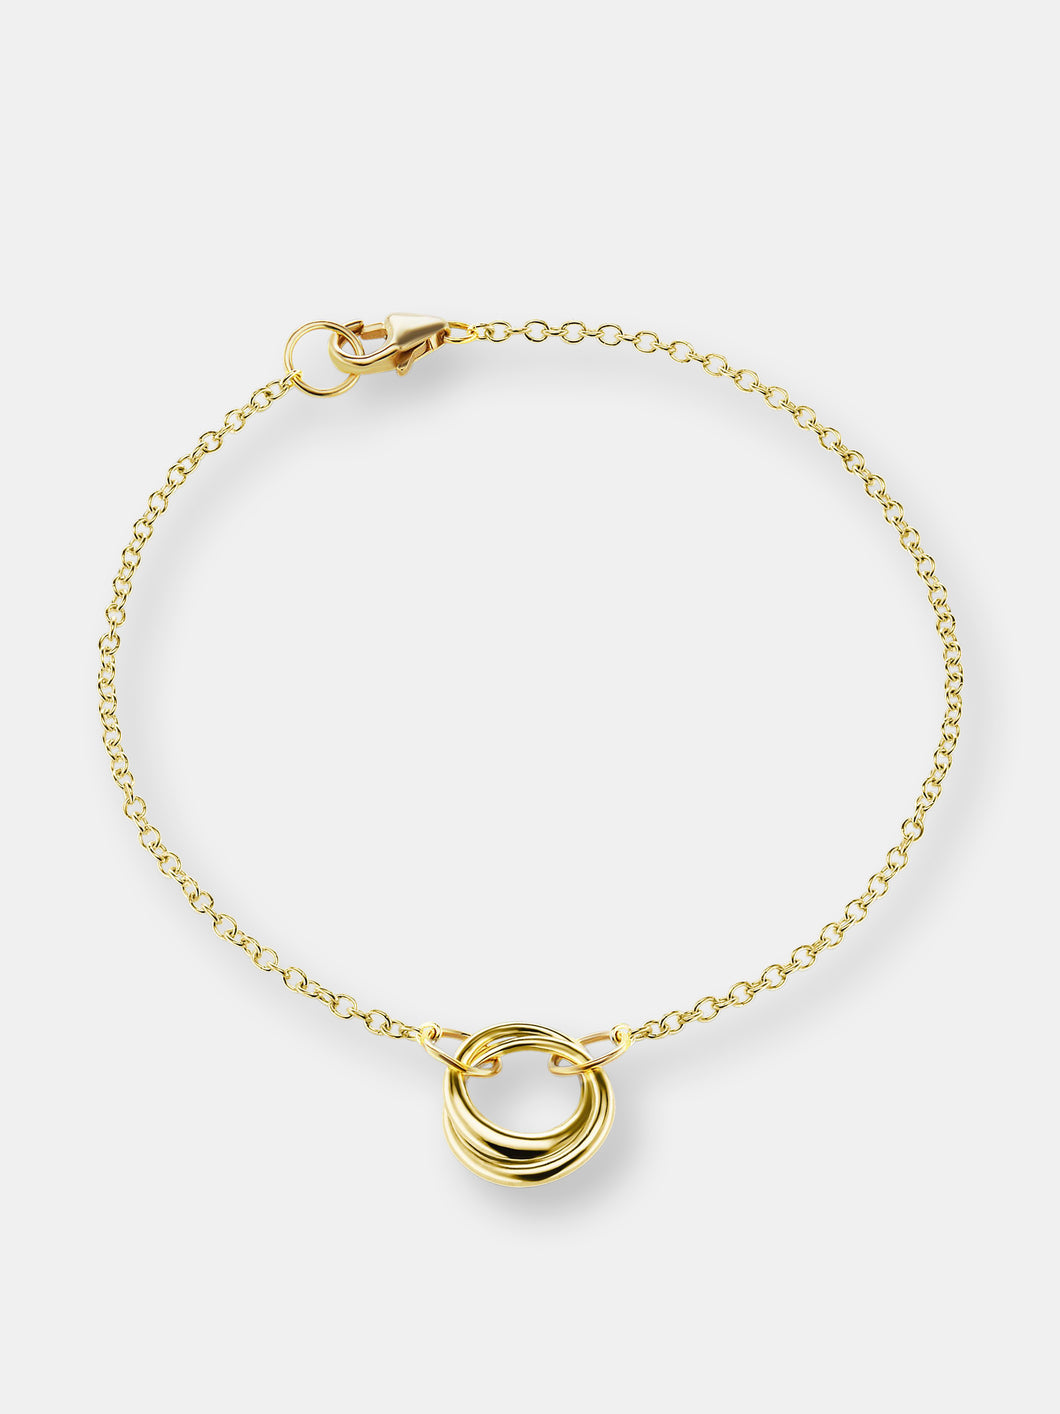 The Gold Encircle Bracelet